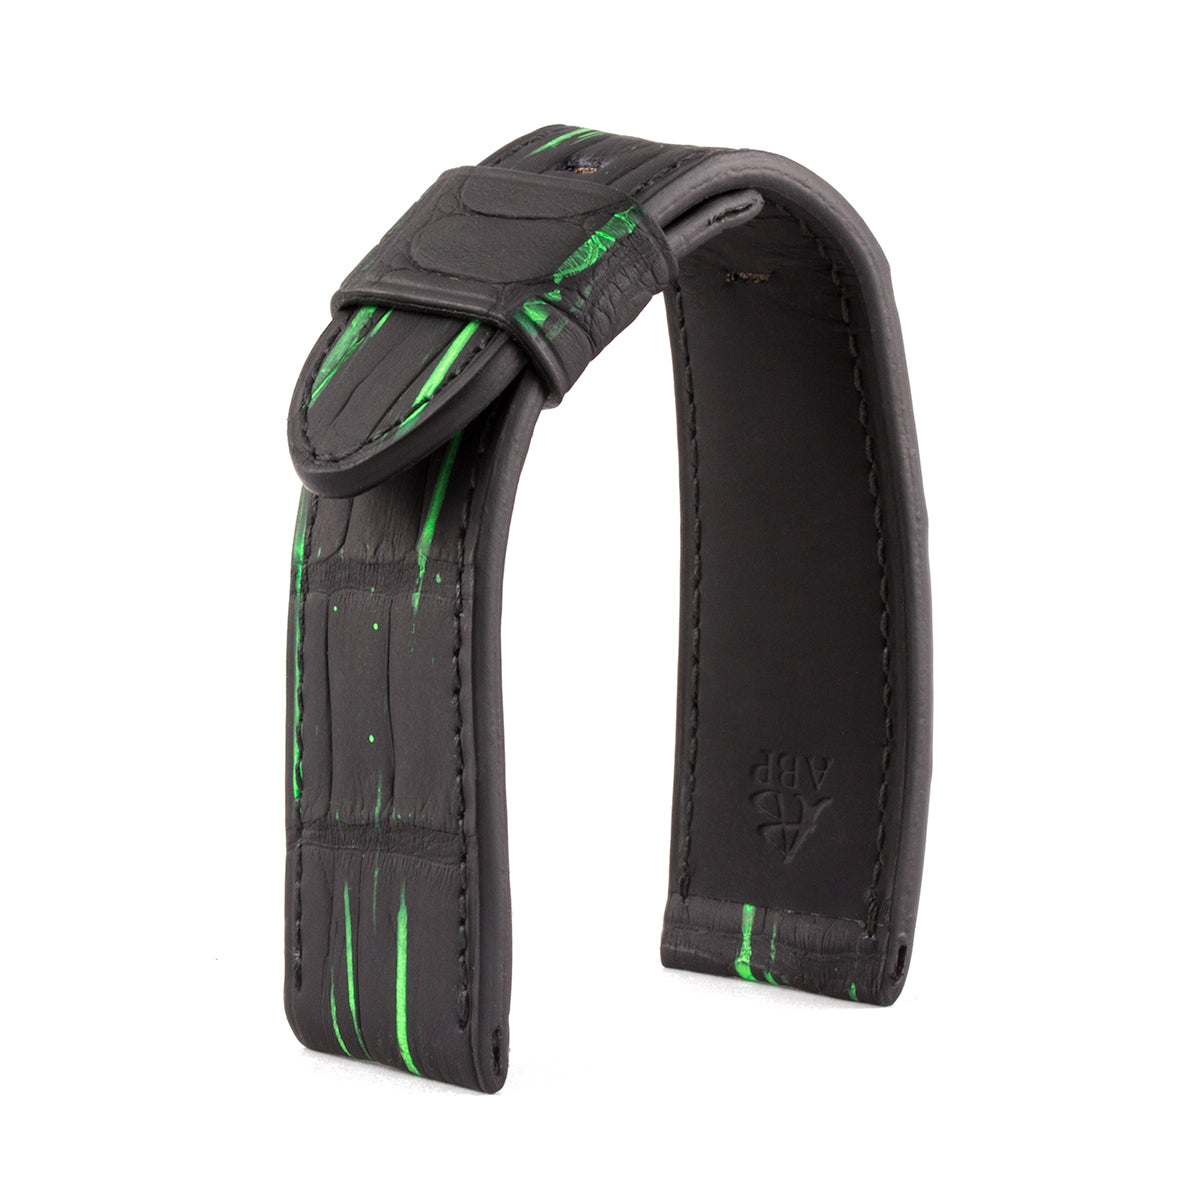 Panerai Radiomir & Luminor - Bracelet de montre cuir fluorescent - Alligator noir / vert - watch band leather strap - ABP Concept -